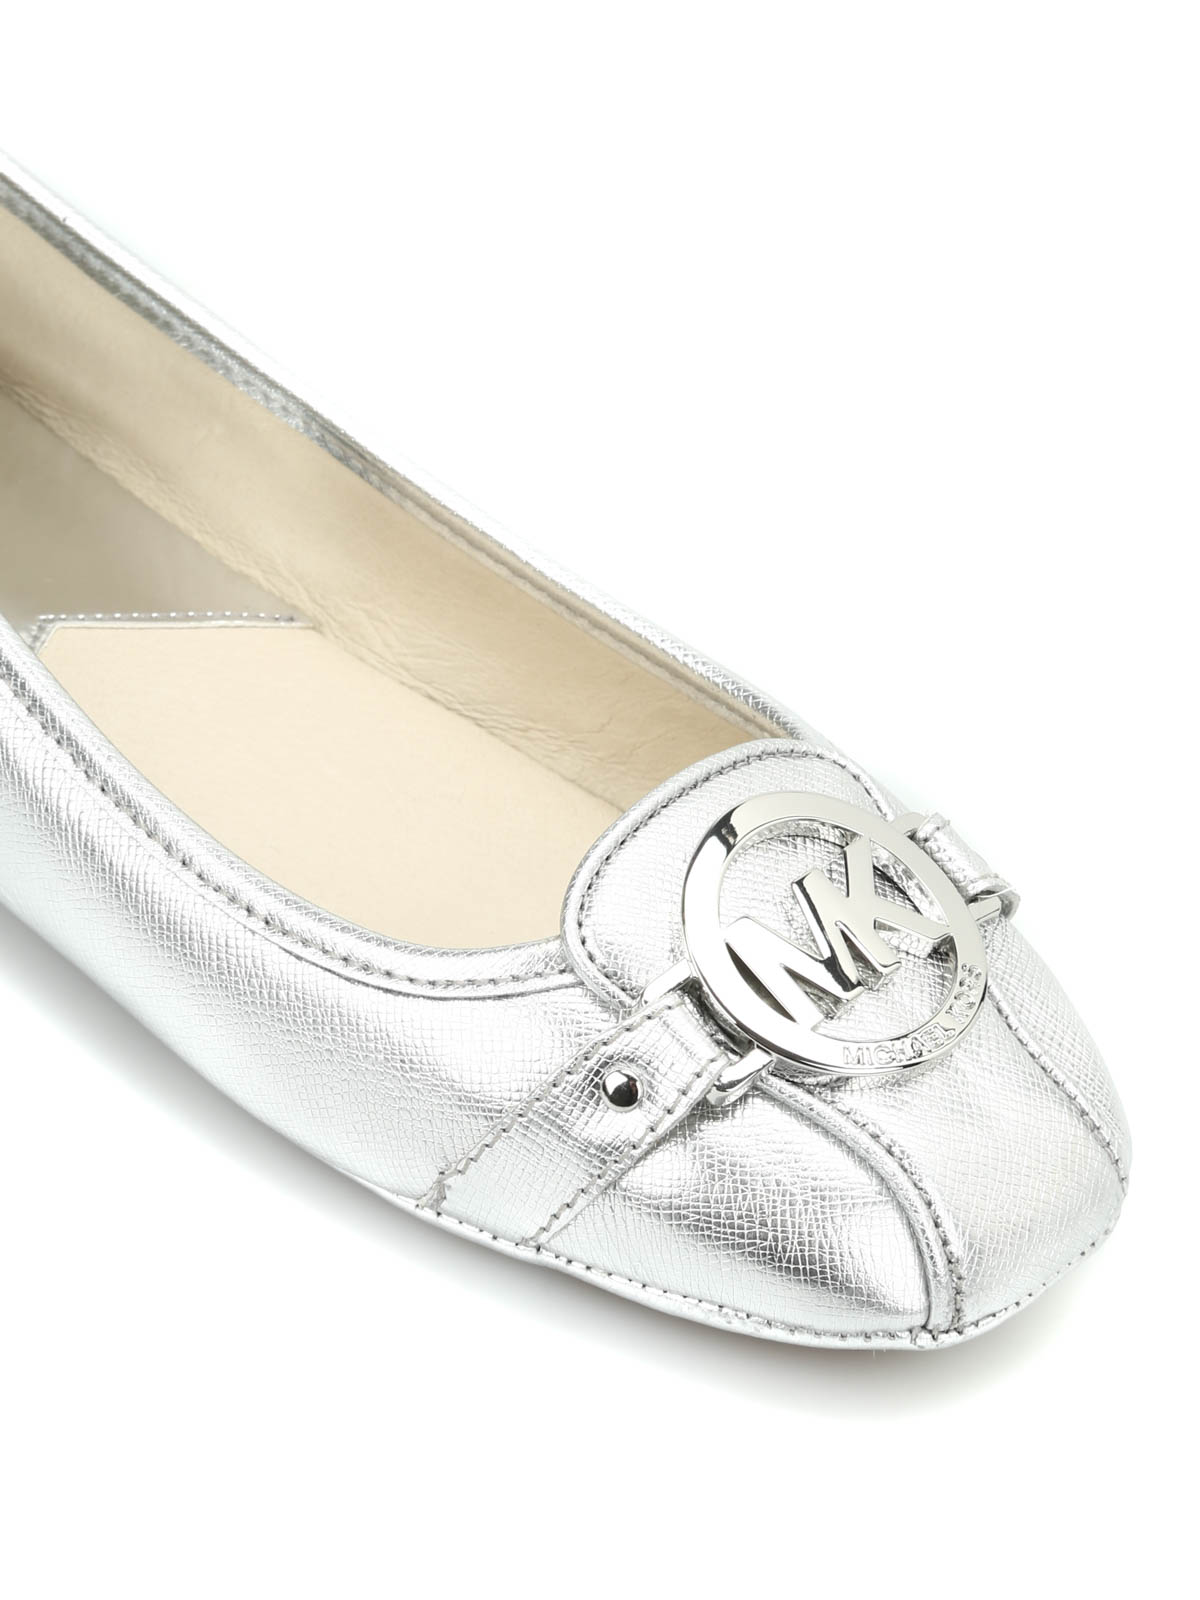 silver shoes michael kors